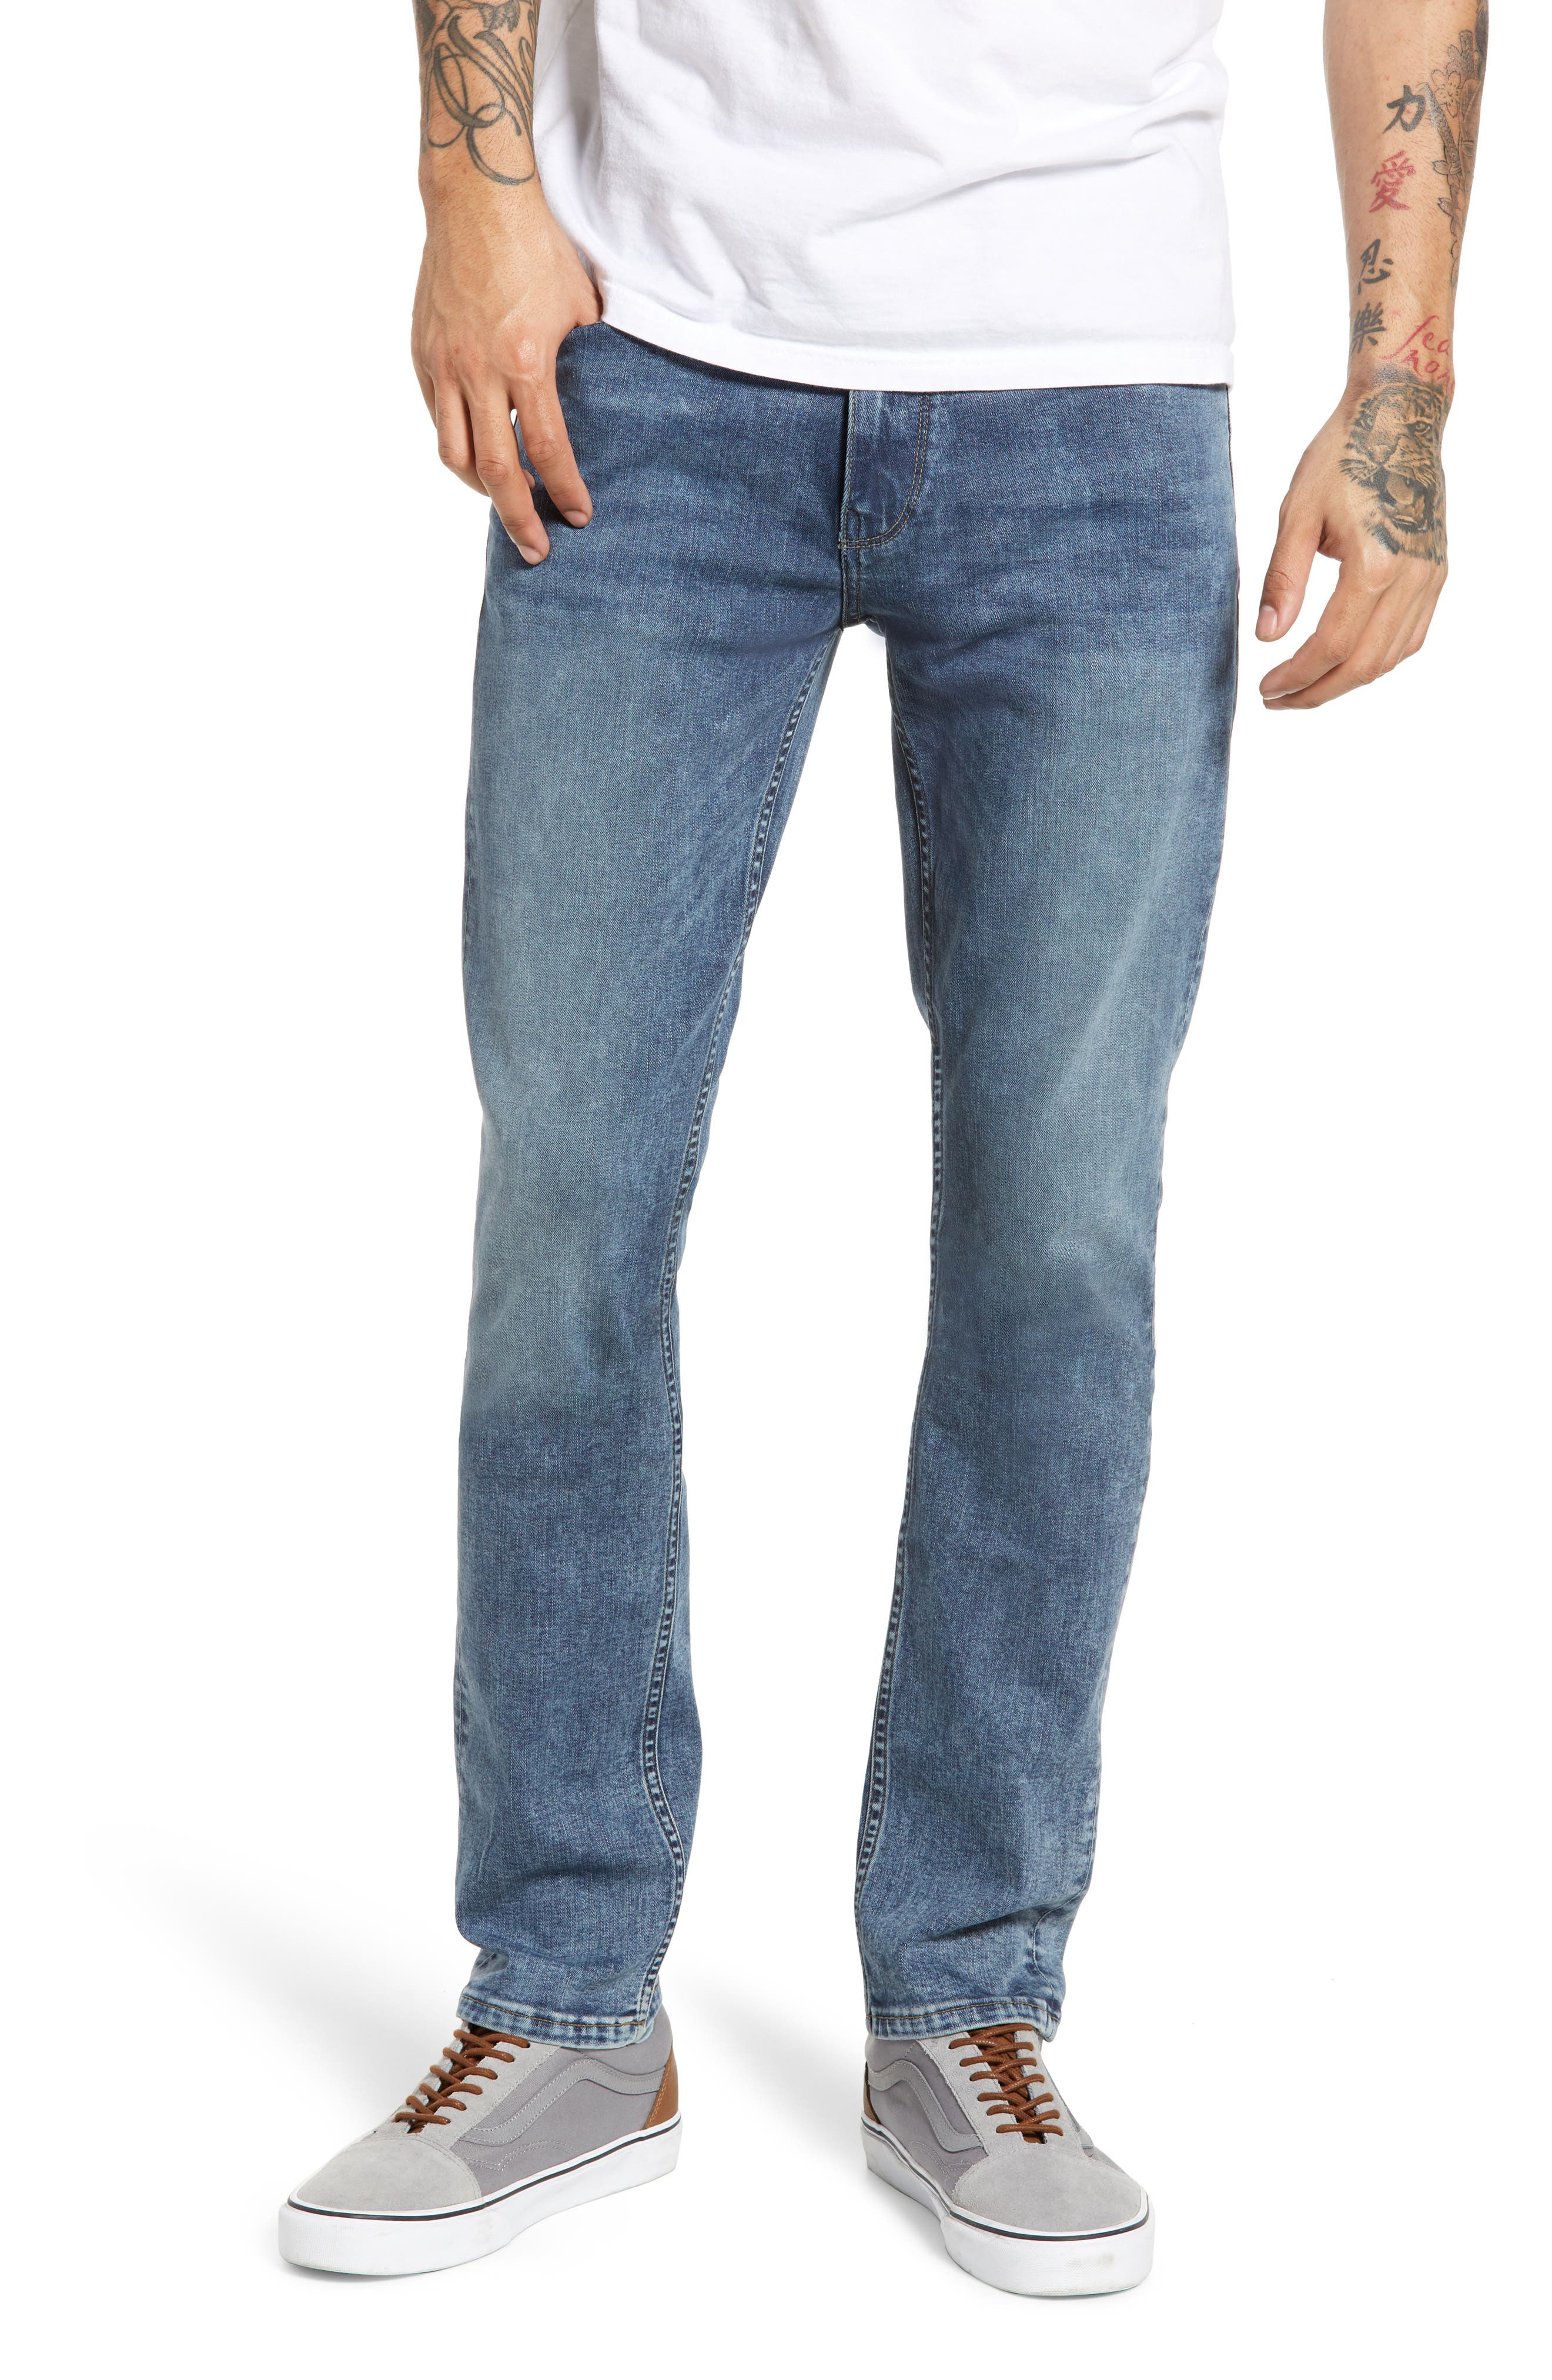 paige lennox jeans nordstrom rack